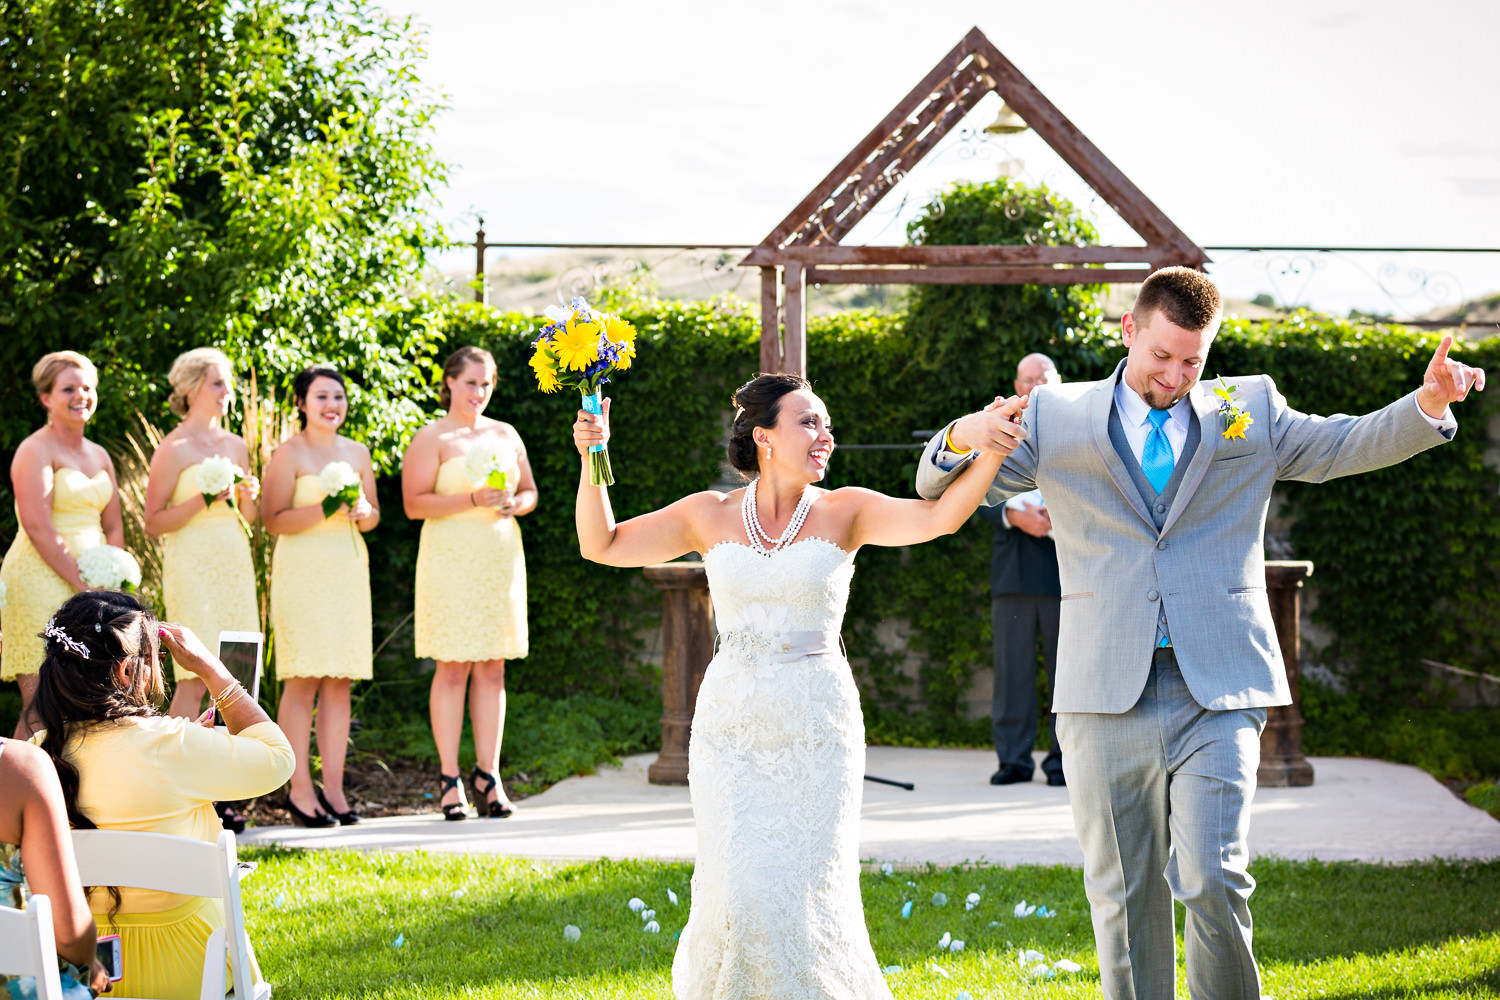 billings-montana-chanceys-wedding-ceremony-bride-groom-recessional.jpg